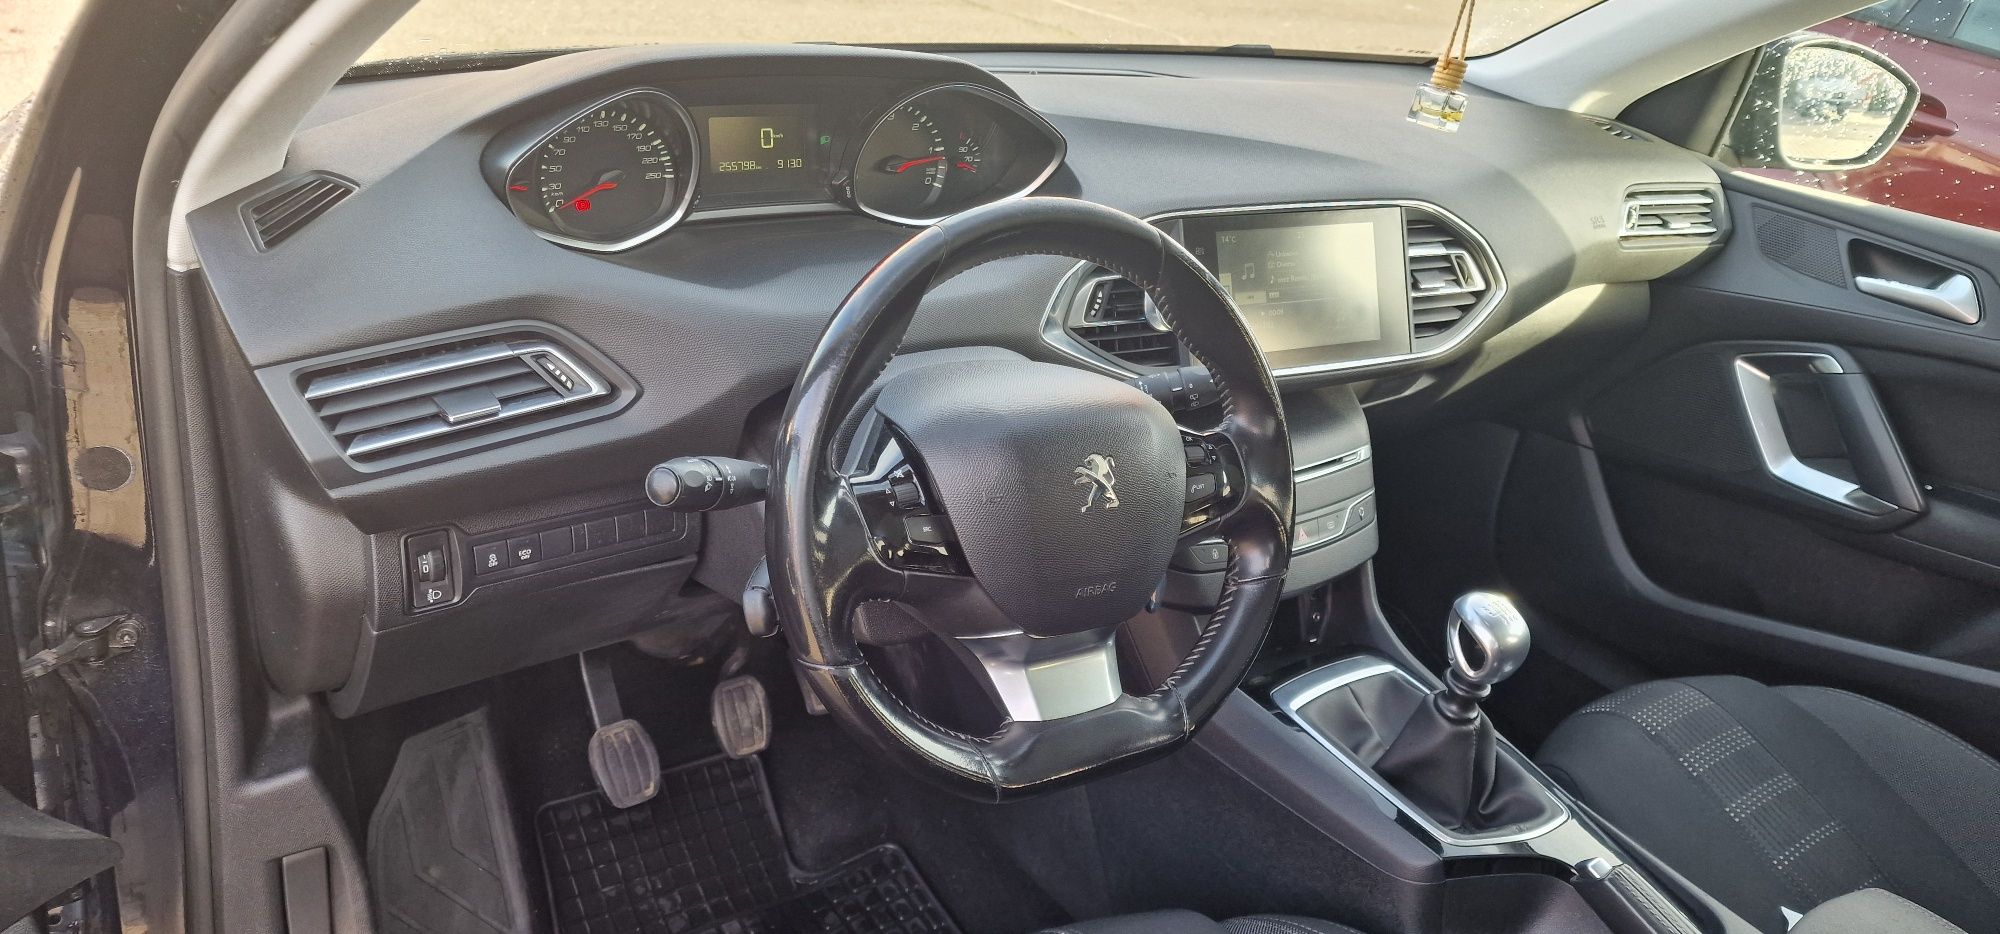 Peugeot 308sw, 2016, euro6, 1.6dci 120cp